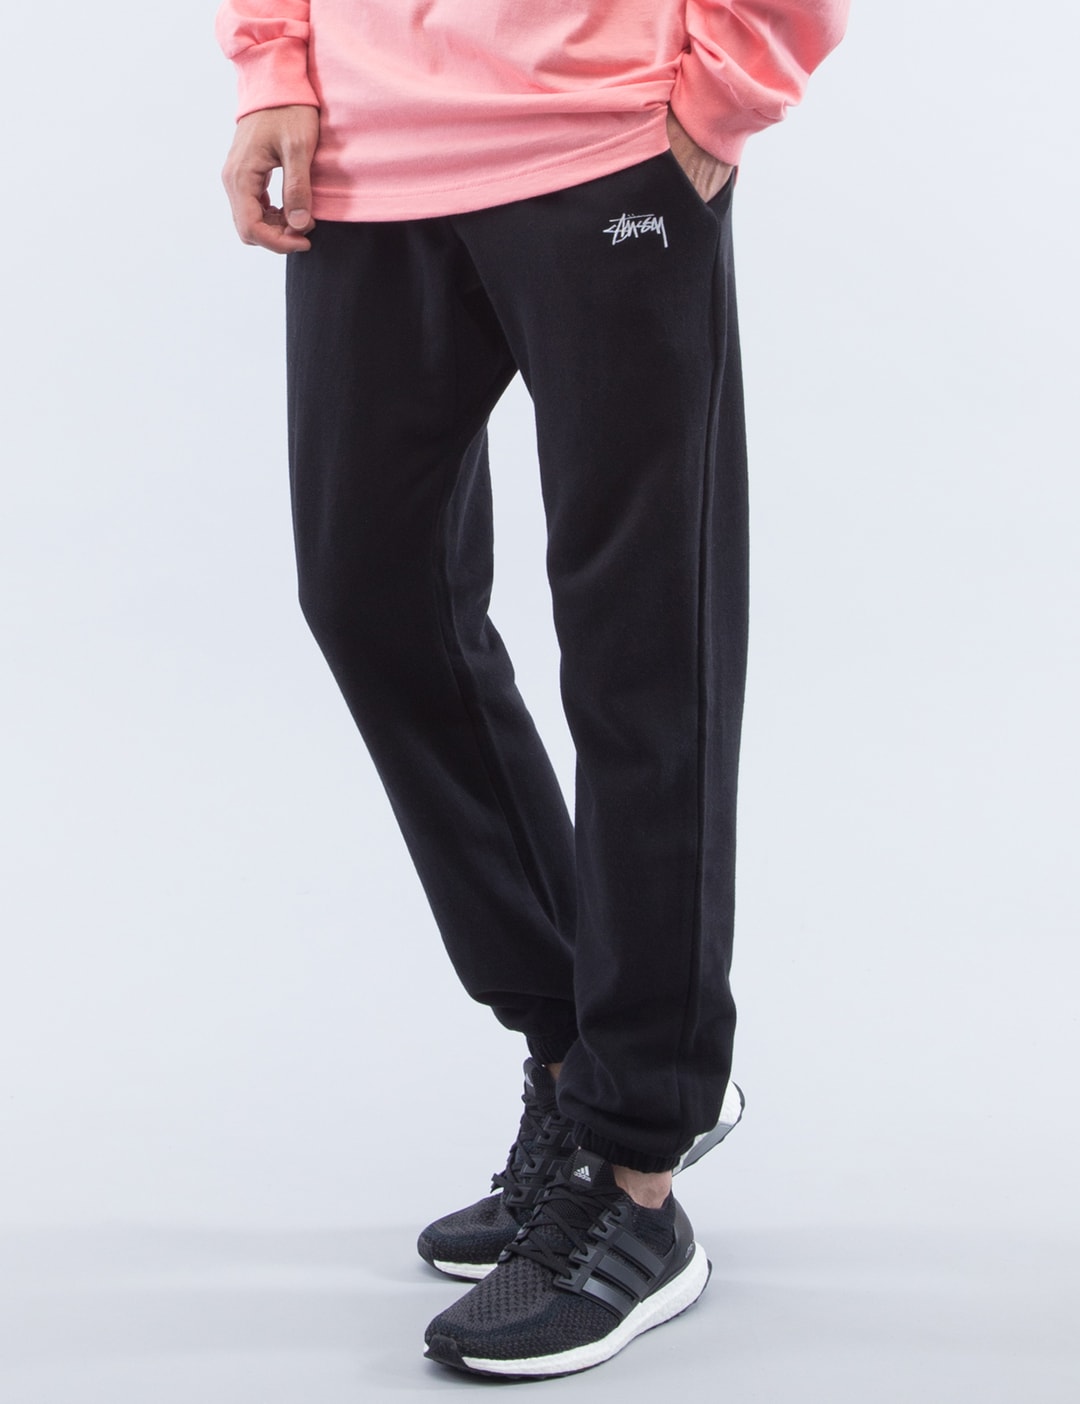 Stüssy - Basic Sweatpants | HBX - Globally Curated Fashion and ...